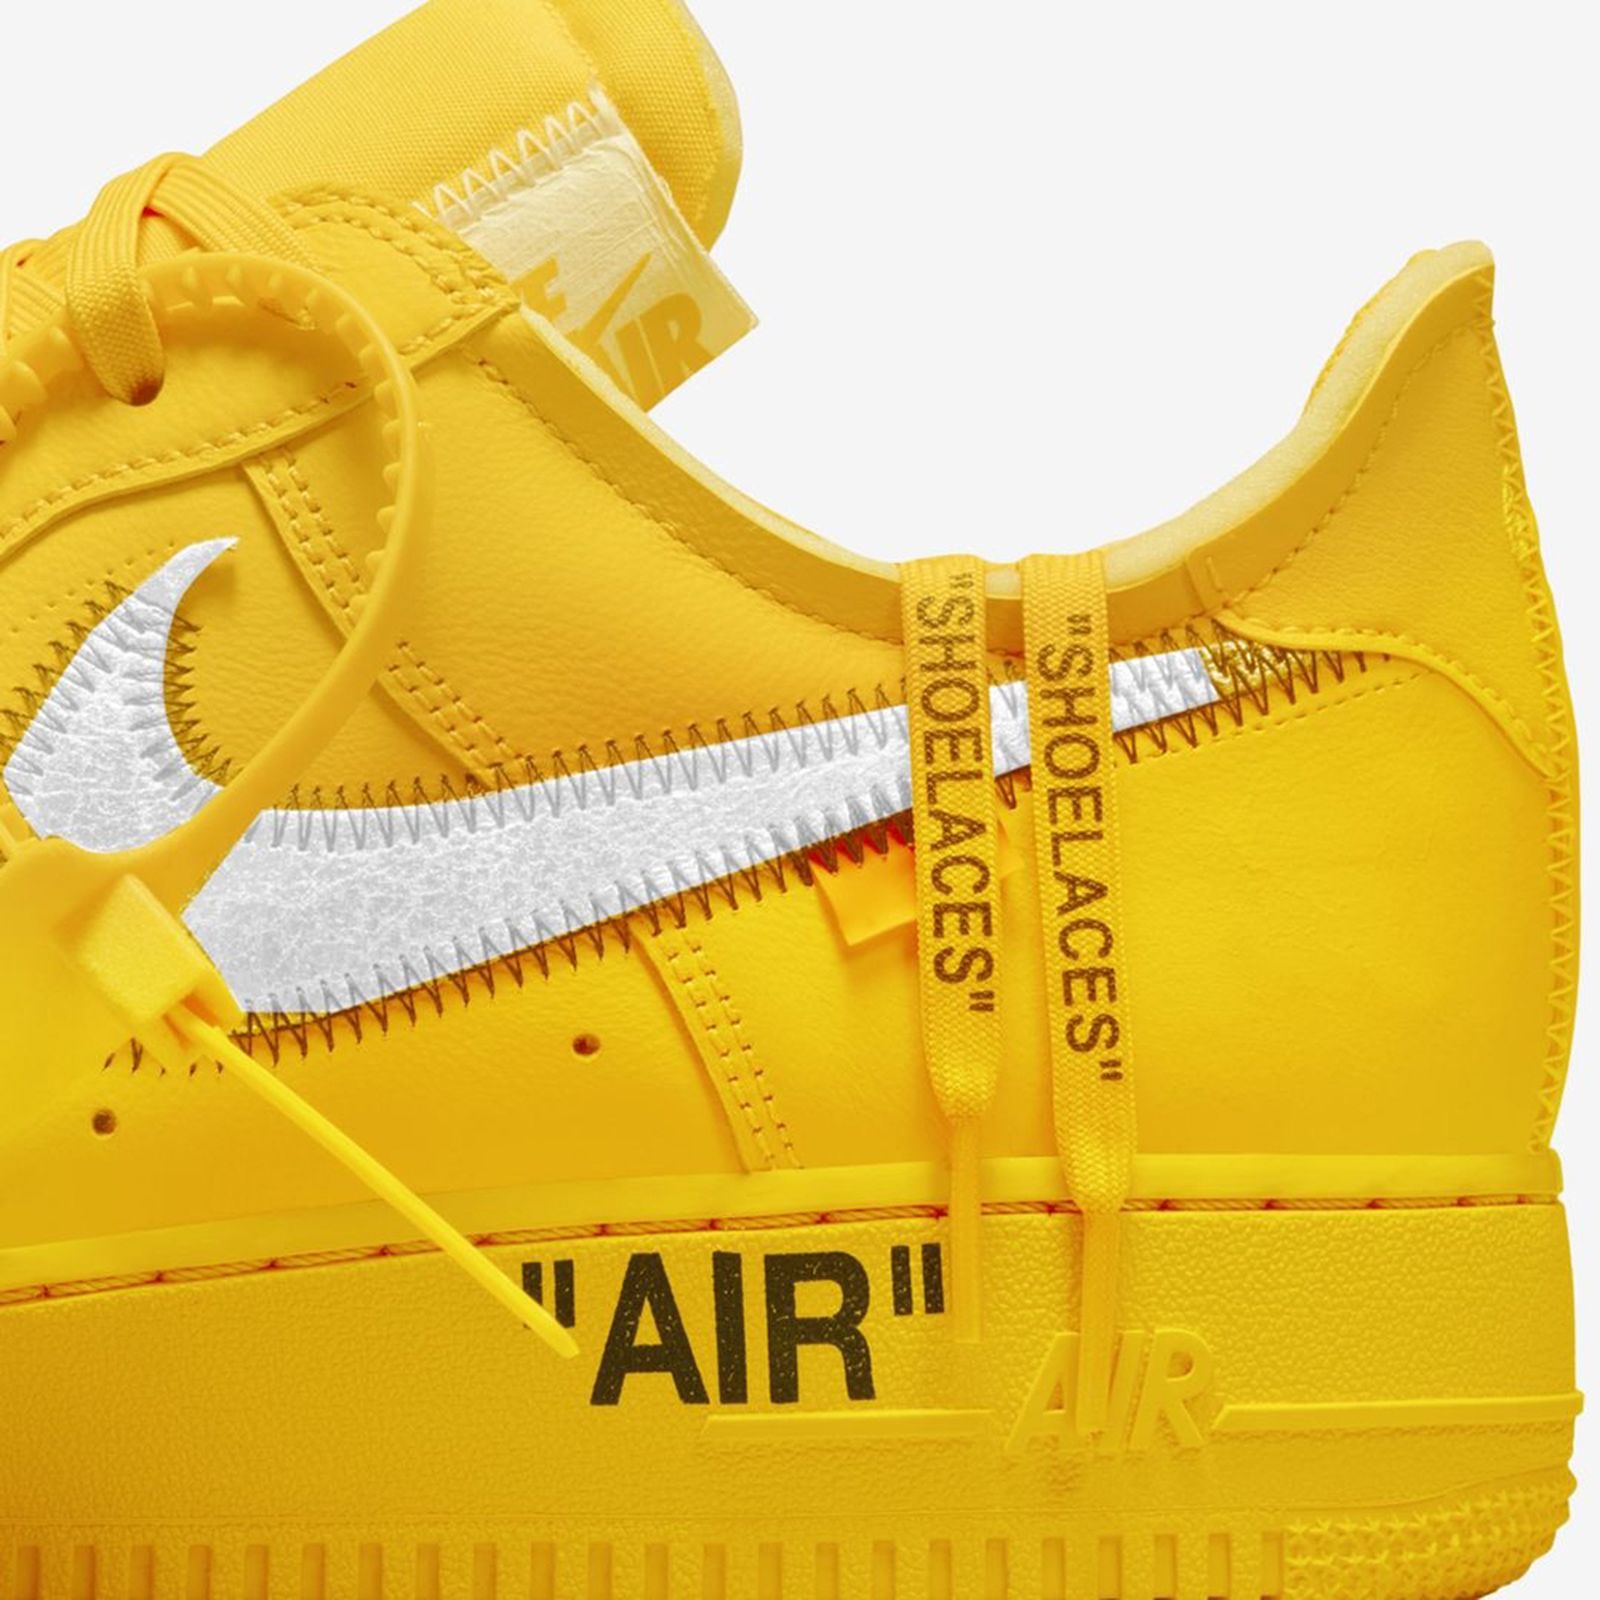 Off-White™ Nike Air 1 "Lemonade": Images & Release Info